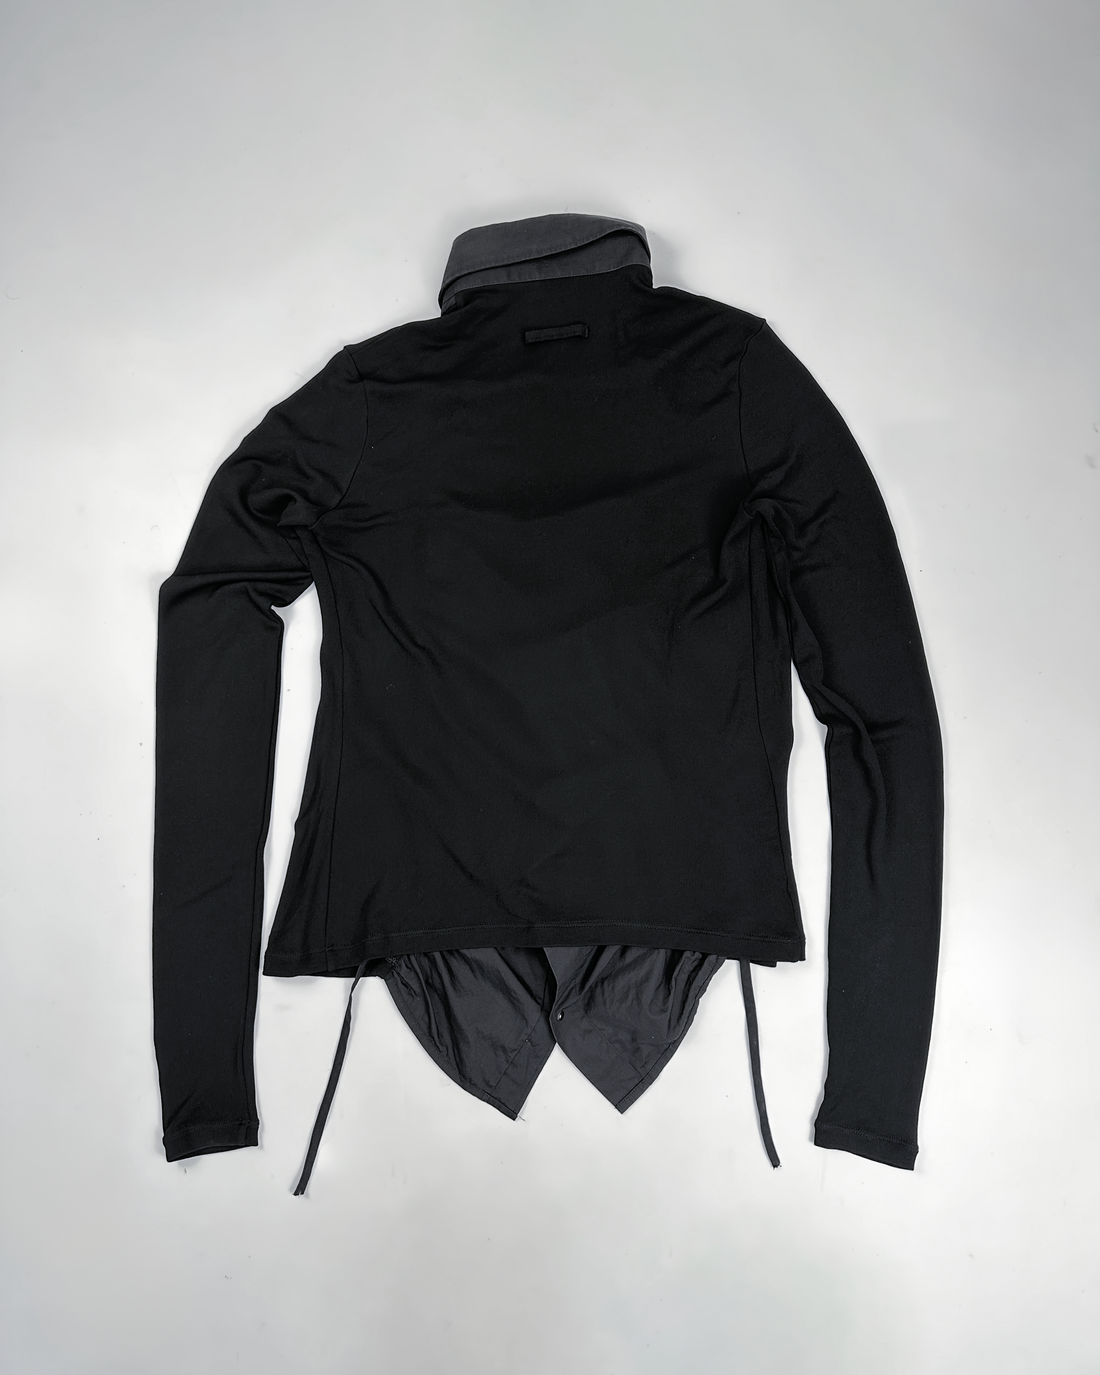 Jean Paul Gaultier 2-Texture Black Wrapped Shirt 2000's